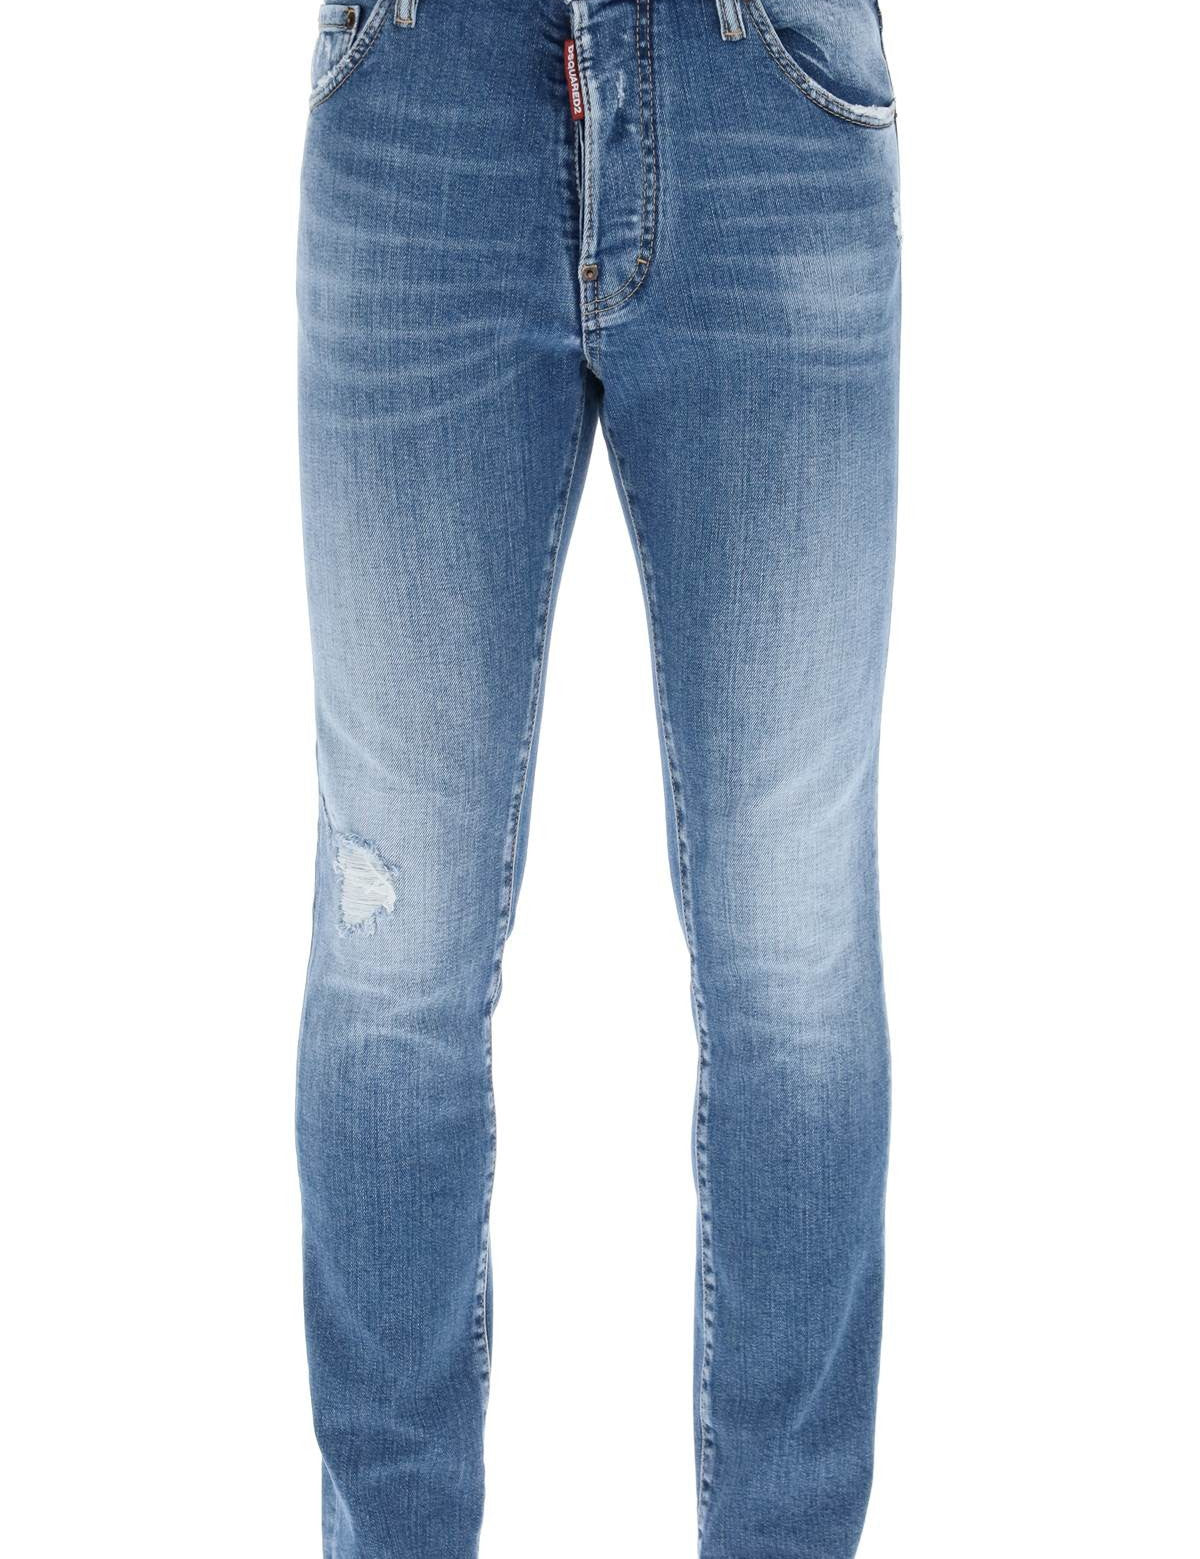 dsquared2-medium-preppy-wash-cool-guy-jeans-for.jpg